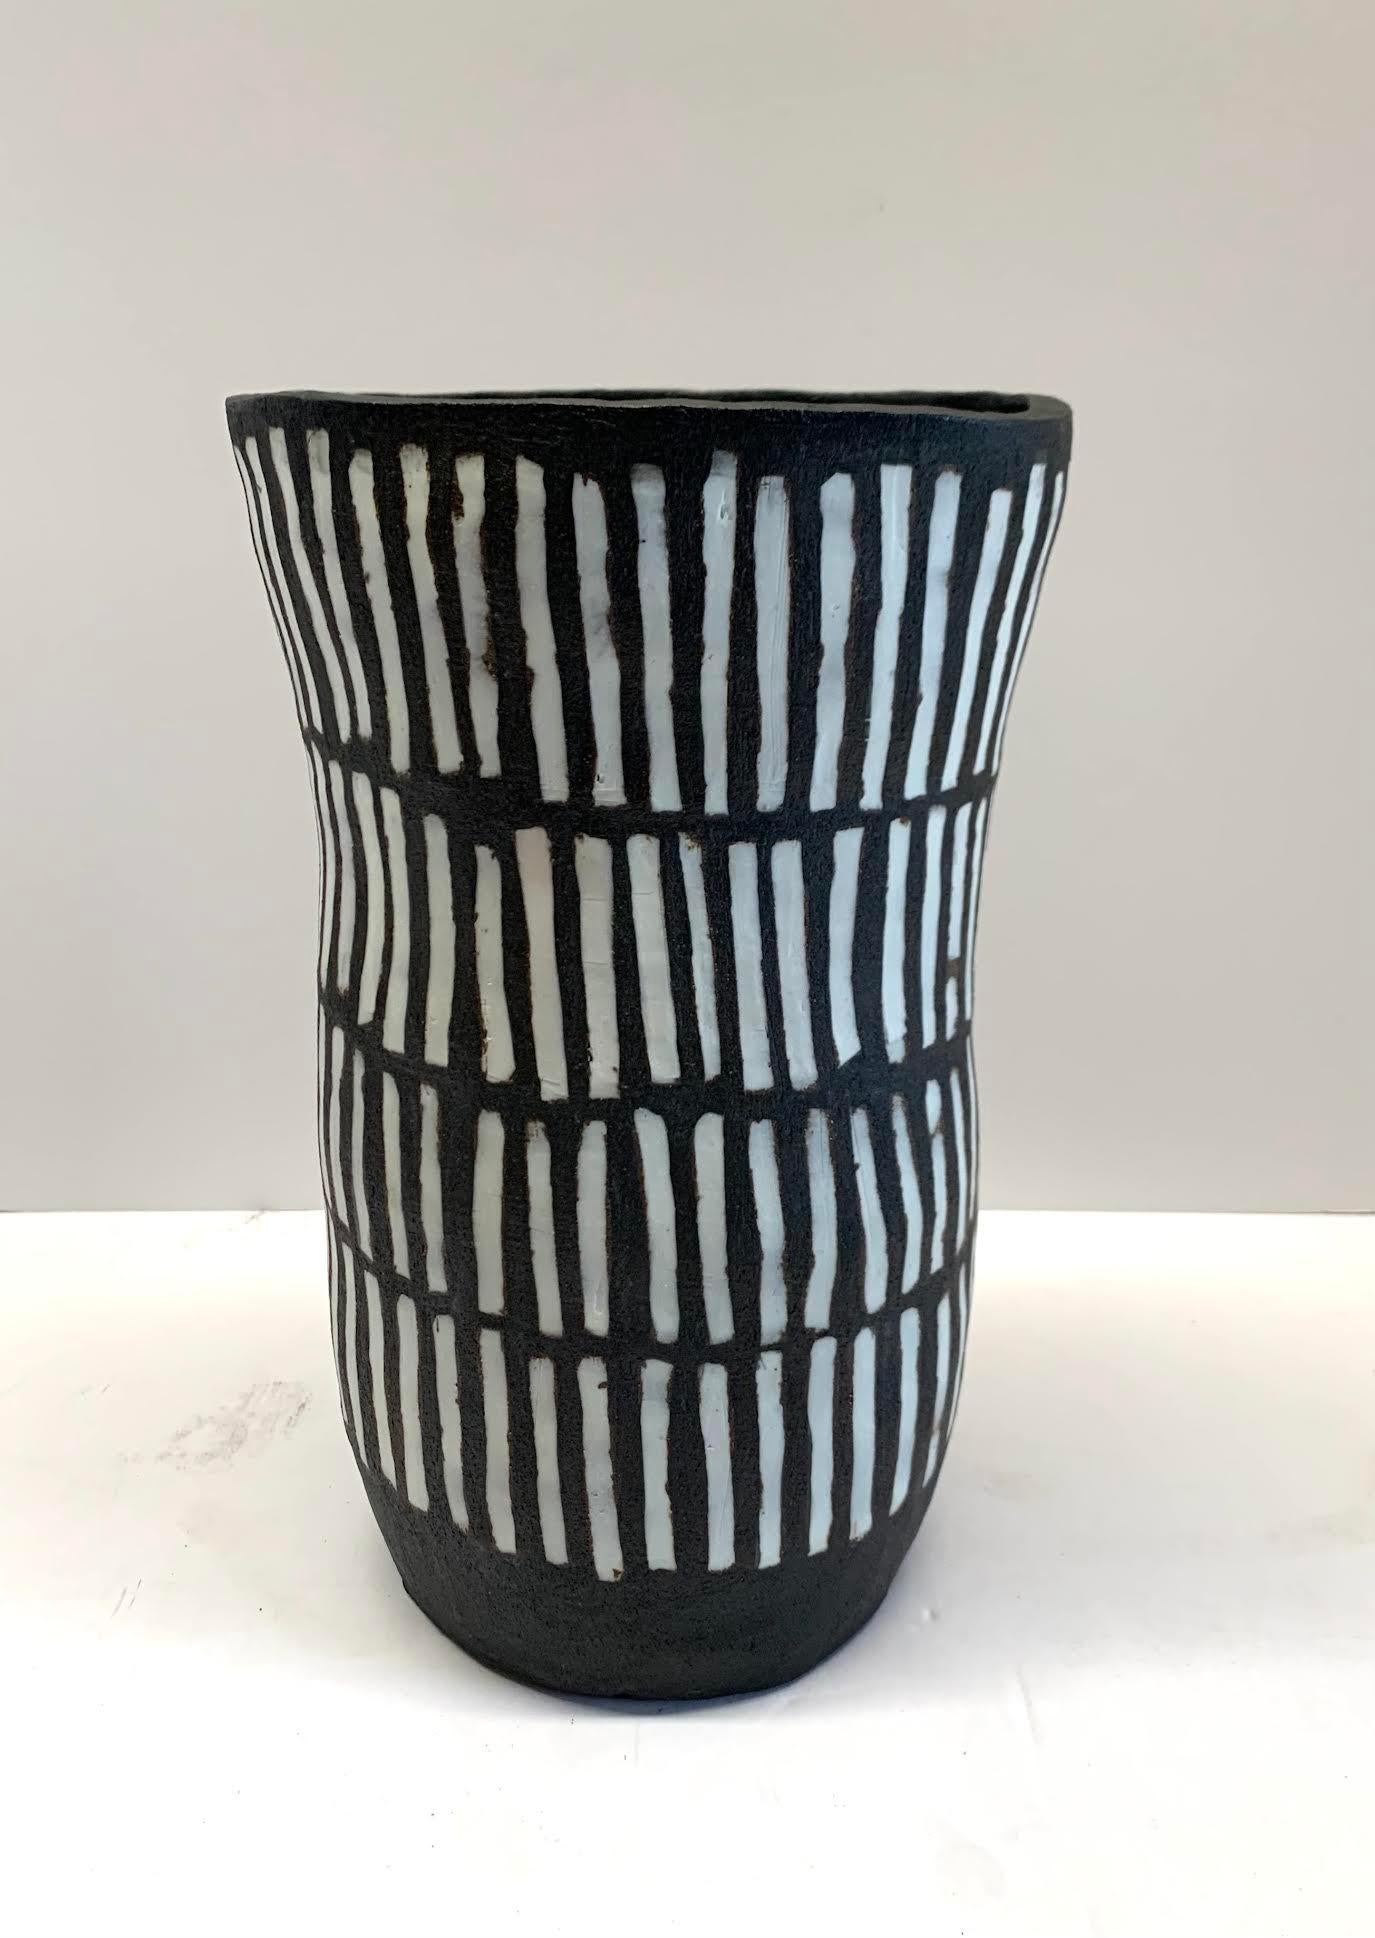 American Black And White Matchstick Design Vase By Ceramicist Brenda Holzke, U.S.A.